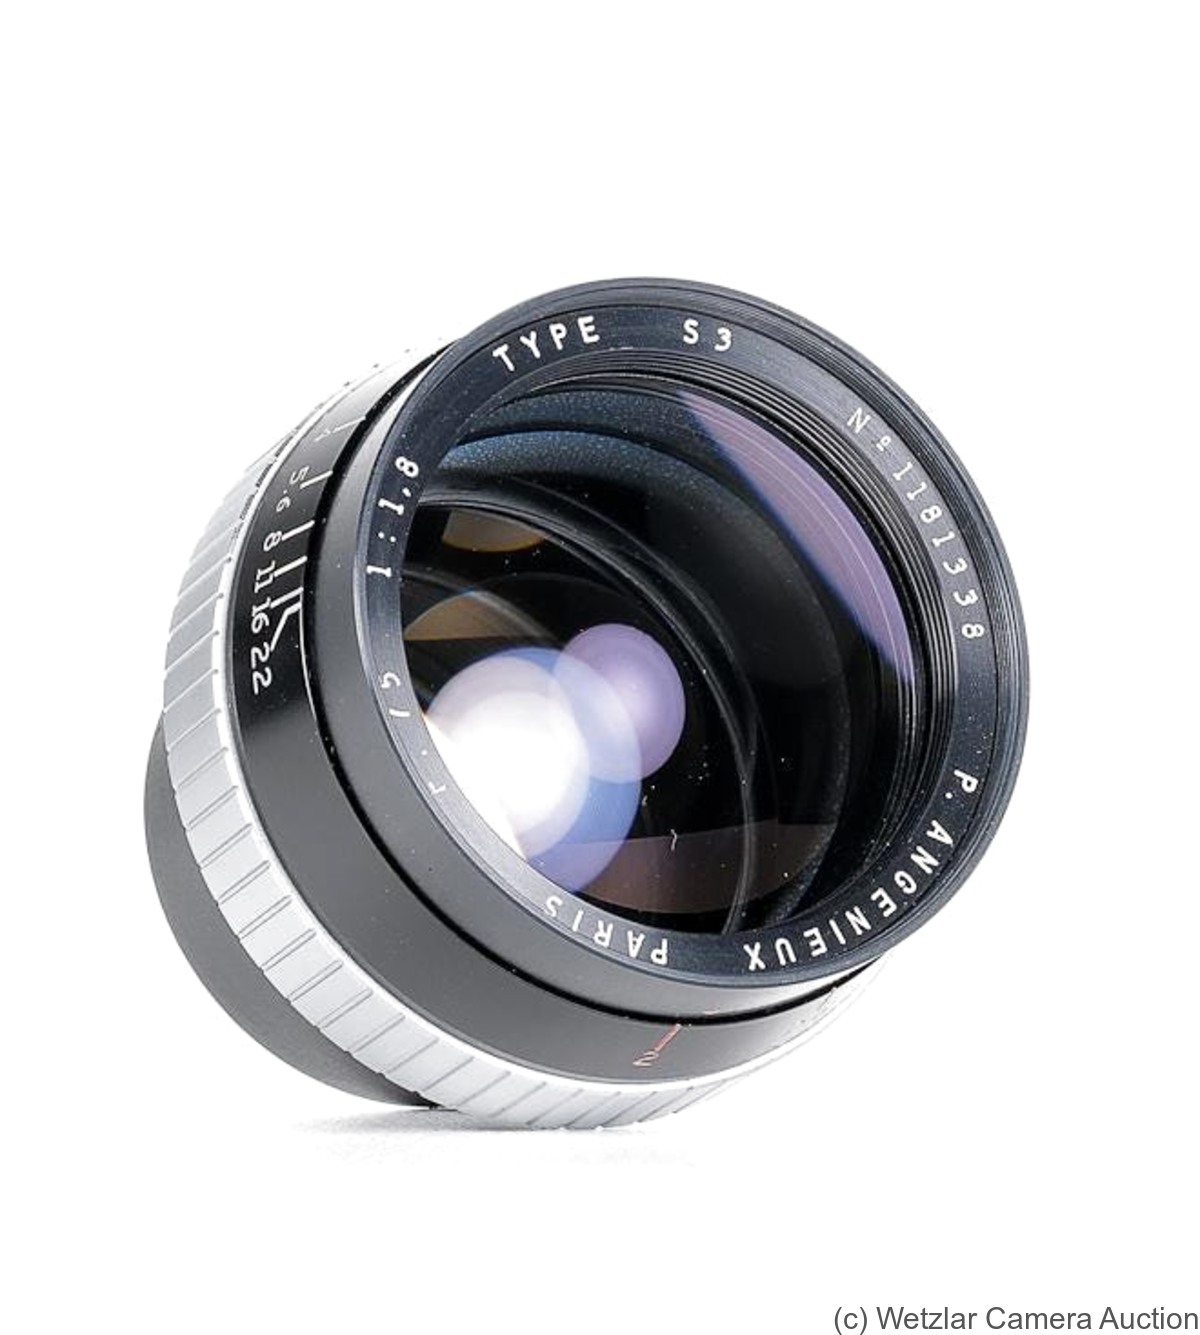 Angénieux: 75mm (7.5cm) f1.8 Type S3 (w/aperture) camera